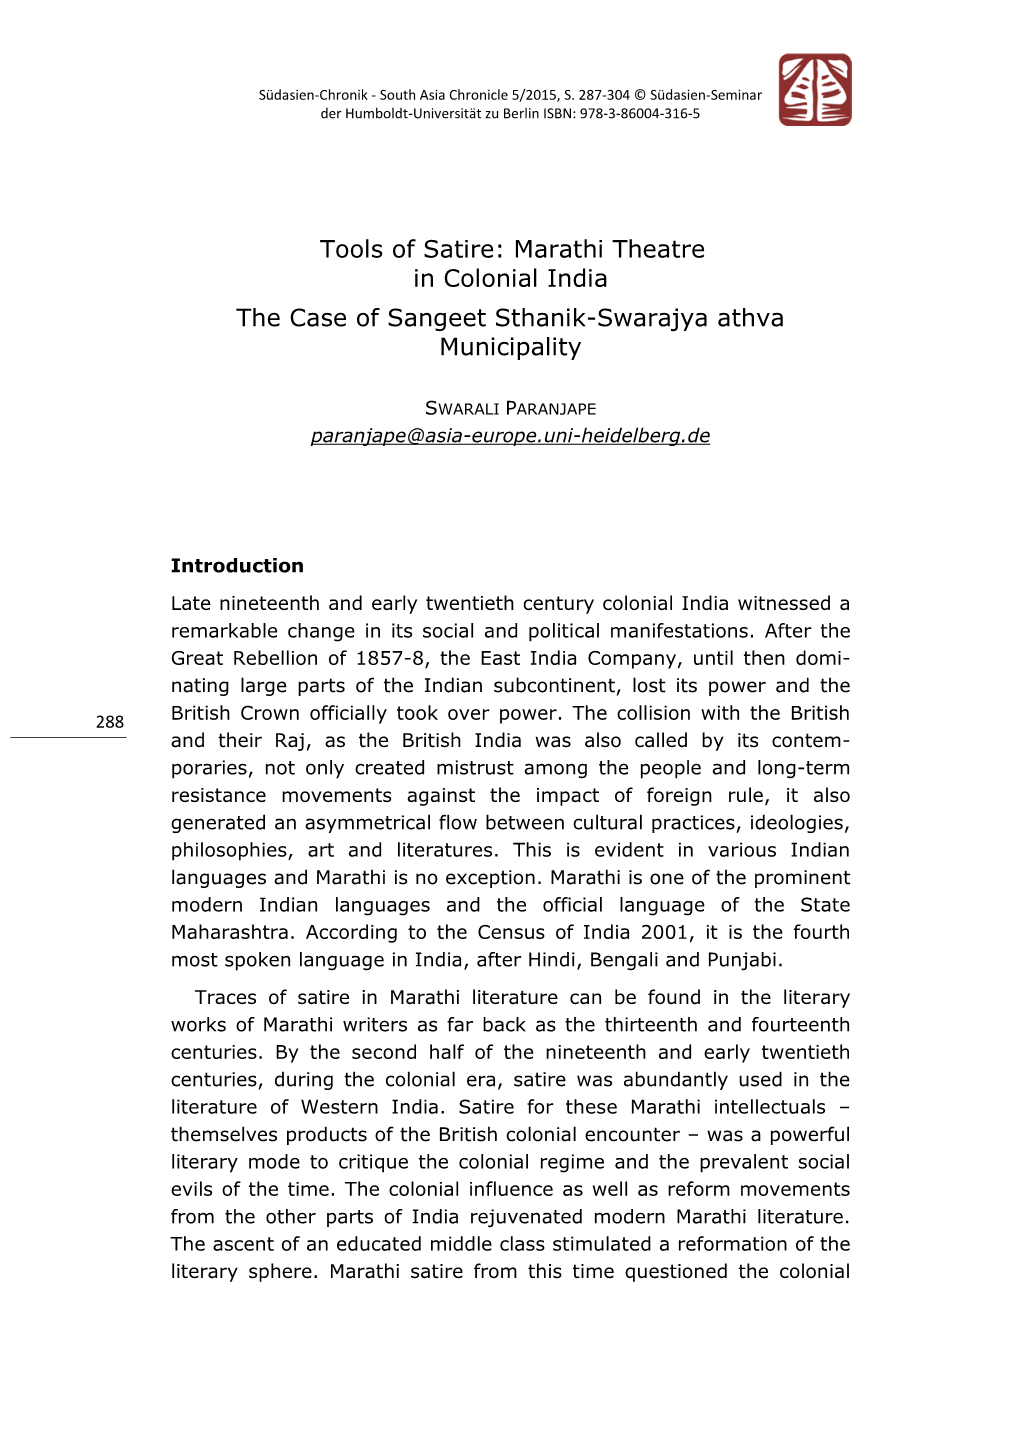 Marathi Theatre in Colonial India the Case of Sangeet Sthanik-Swarajya Athva Municipality